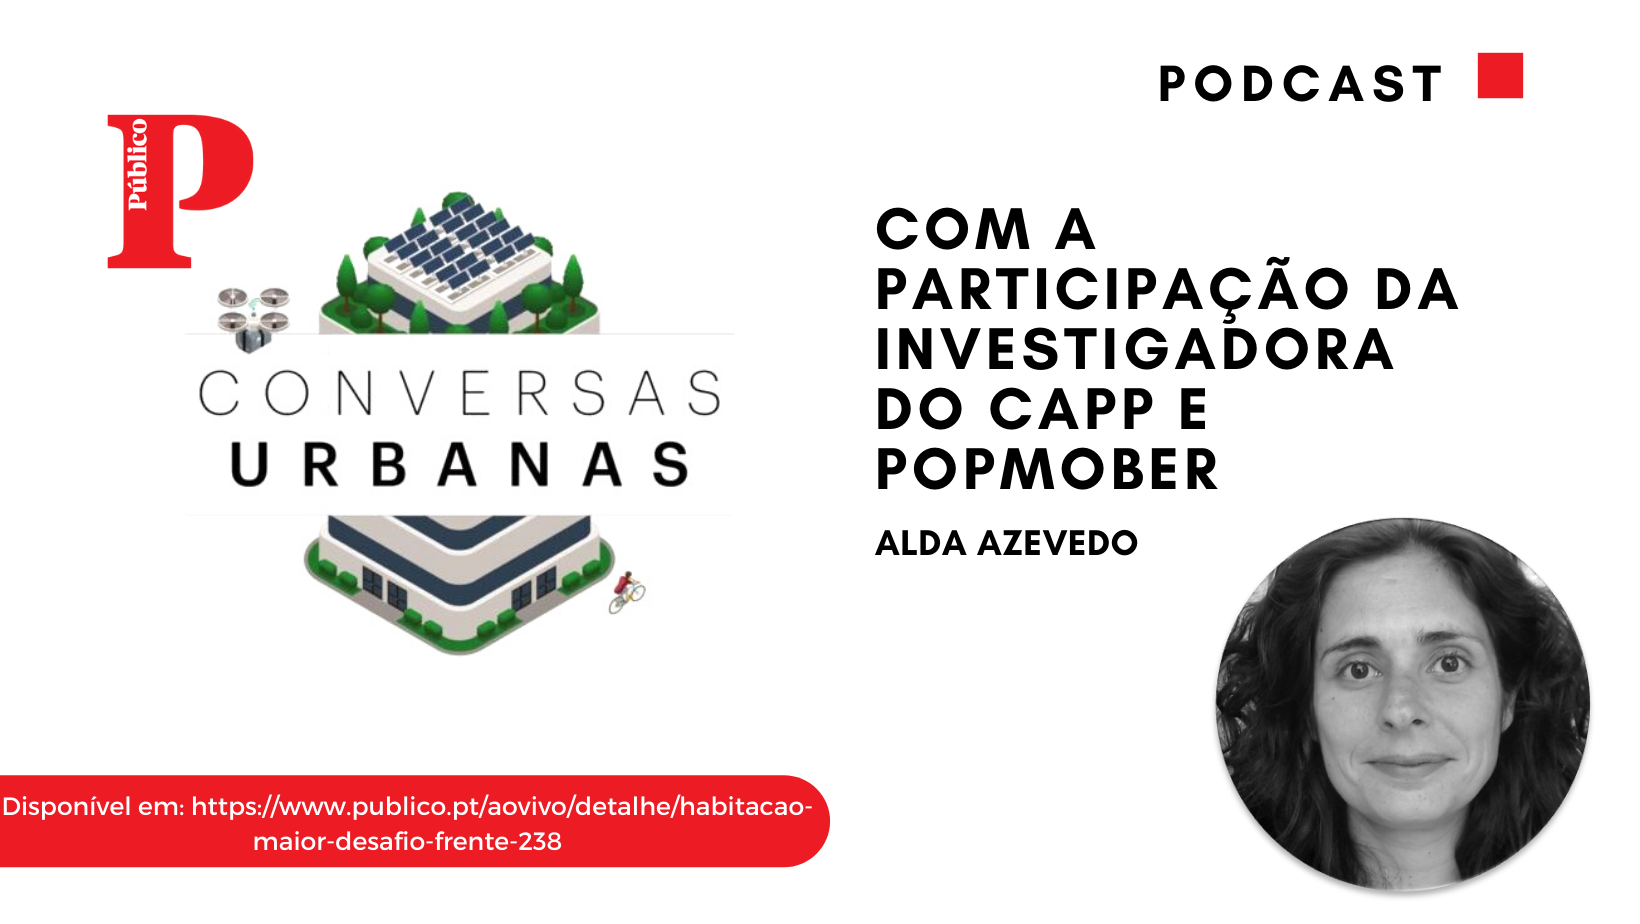 Podcast popmoberAldaAzevedo